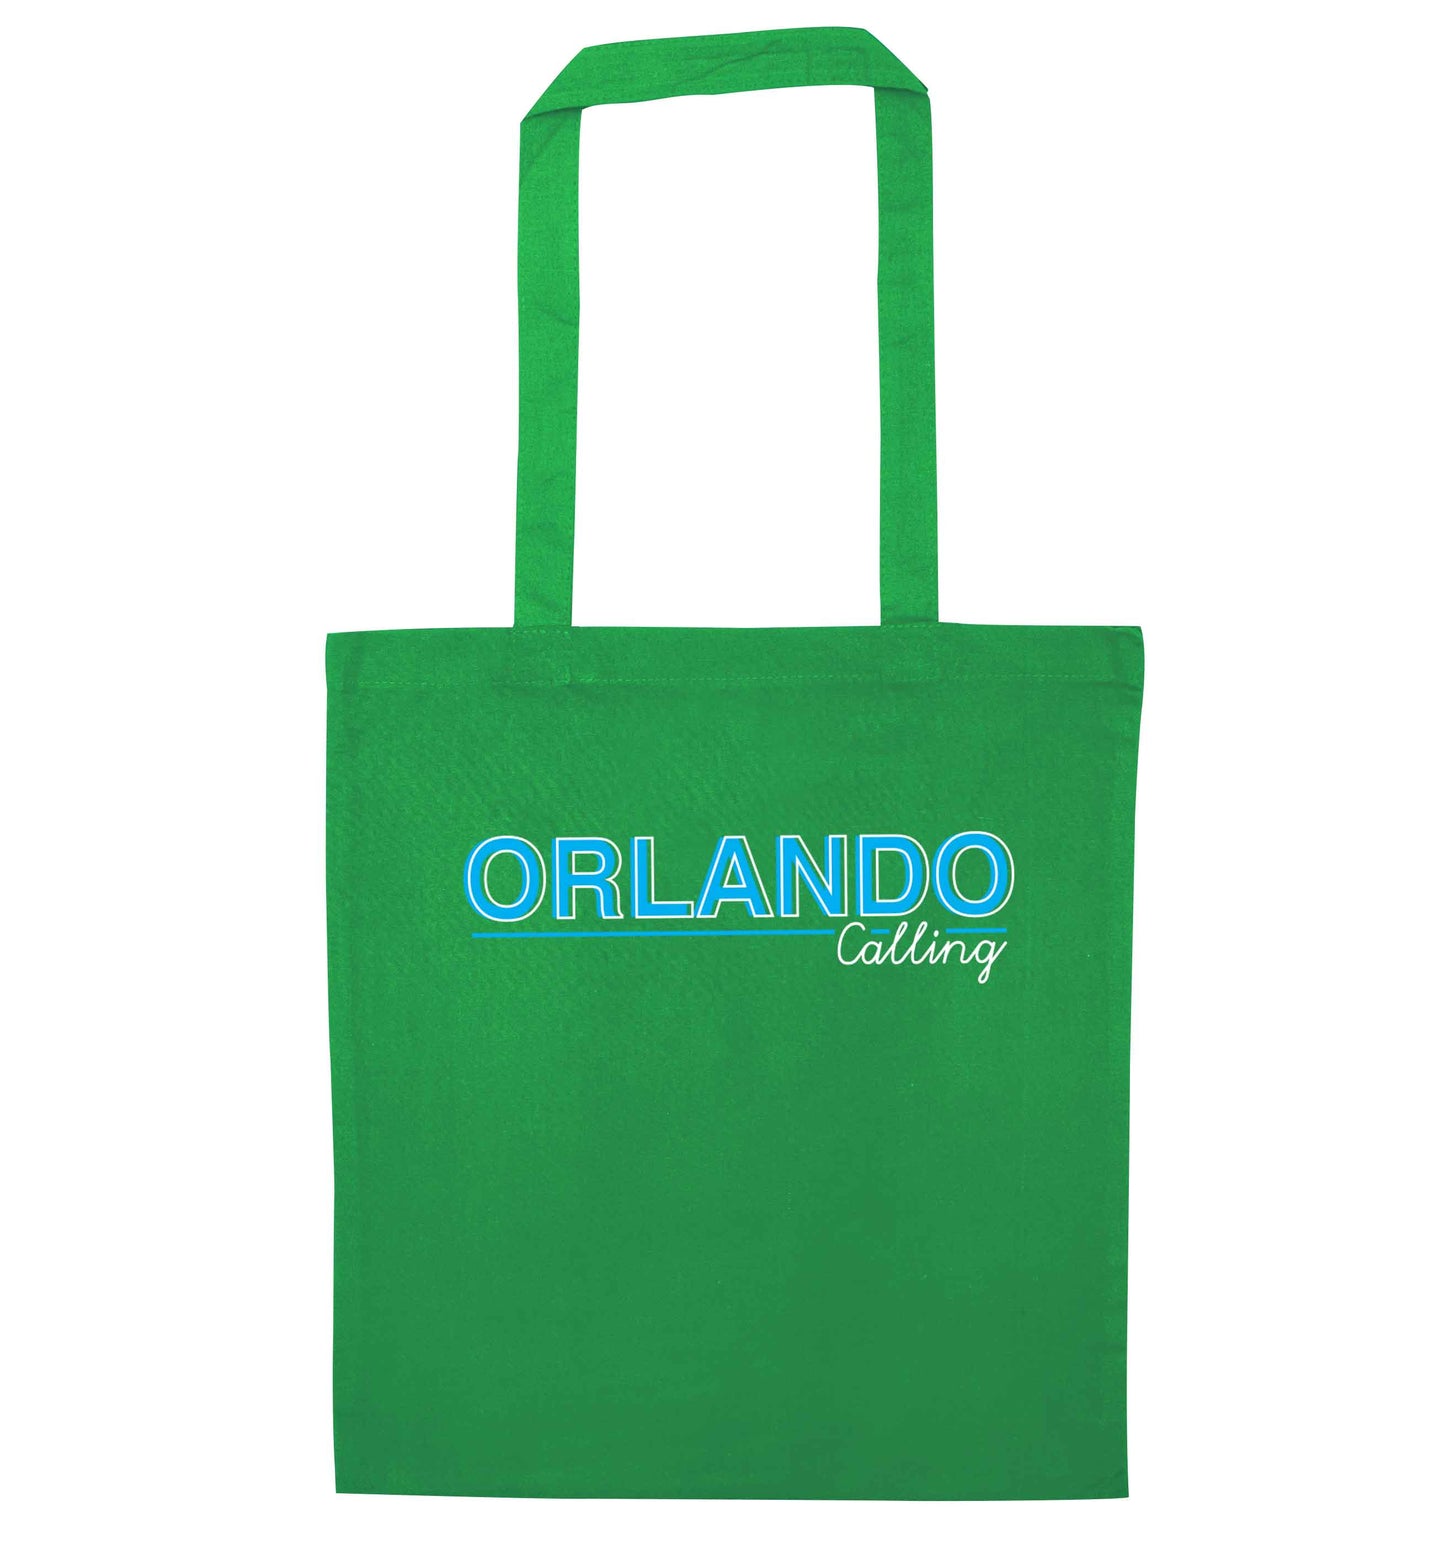 Orlando calling green tote bag